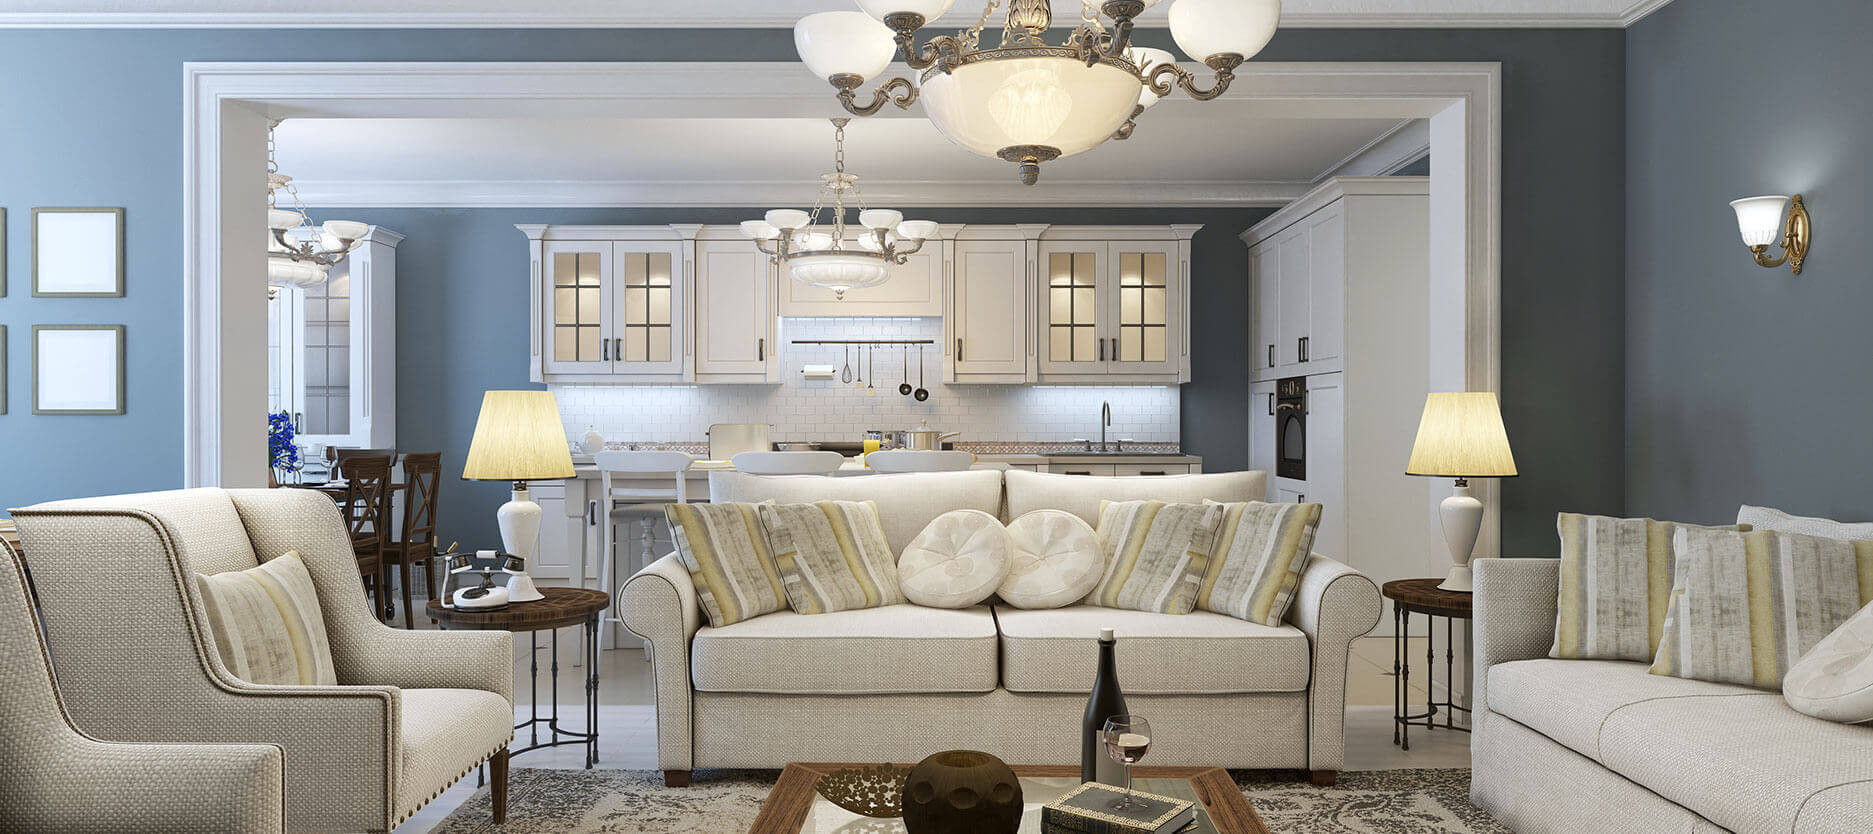 Living Room Paint Design
 5 most Popular Living Room Paint Ideas